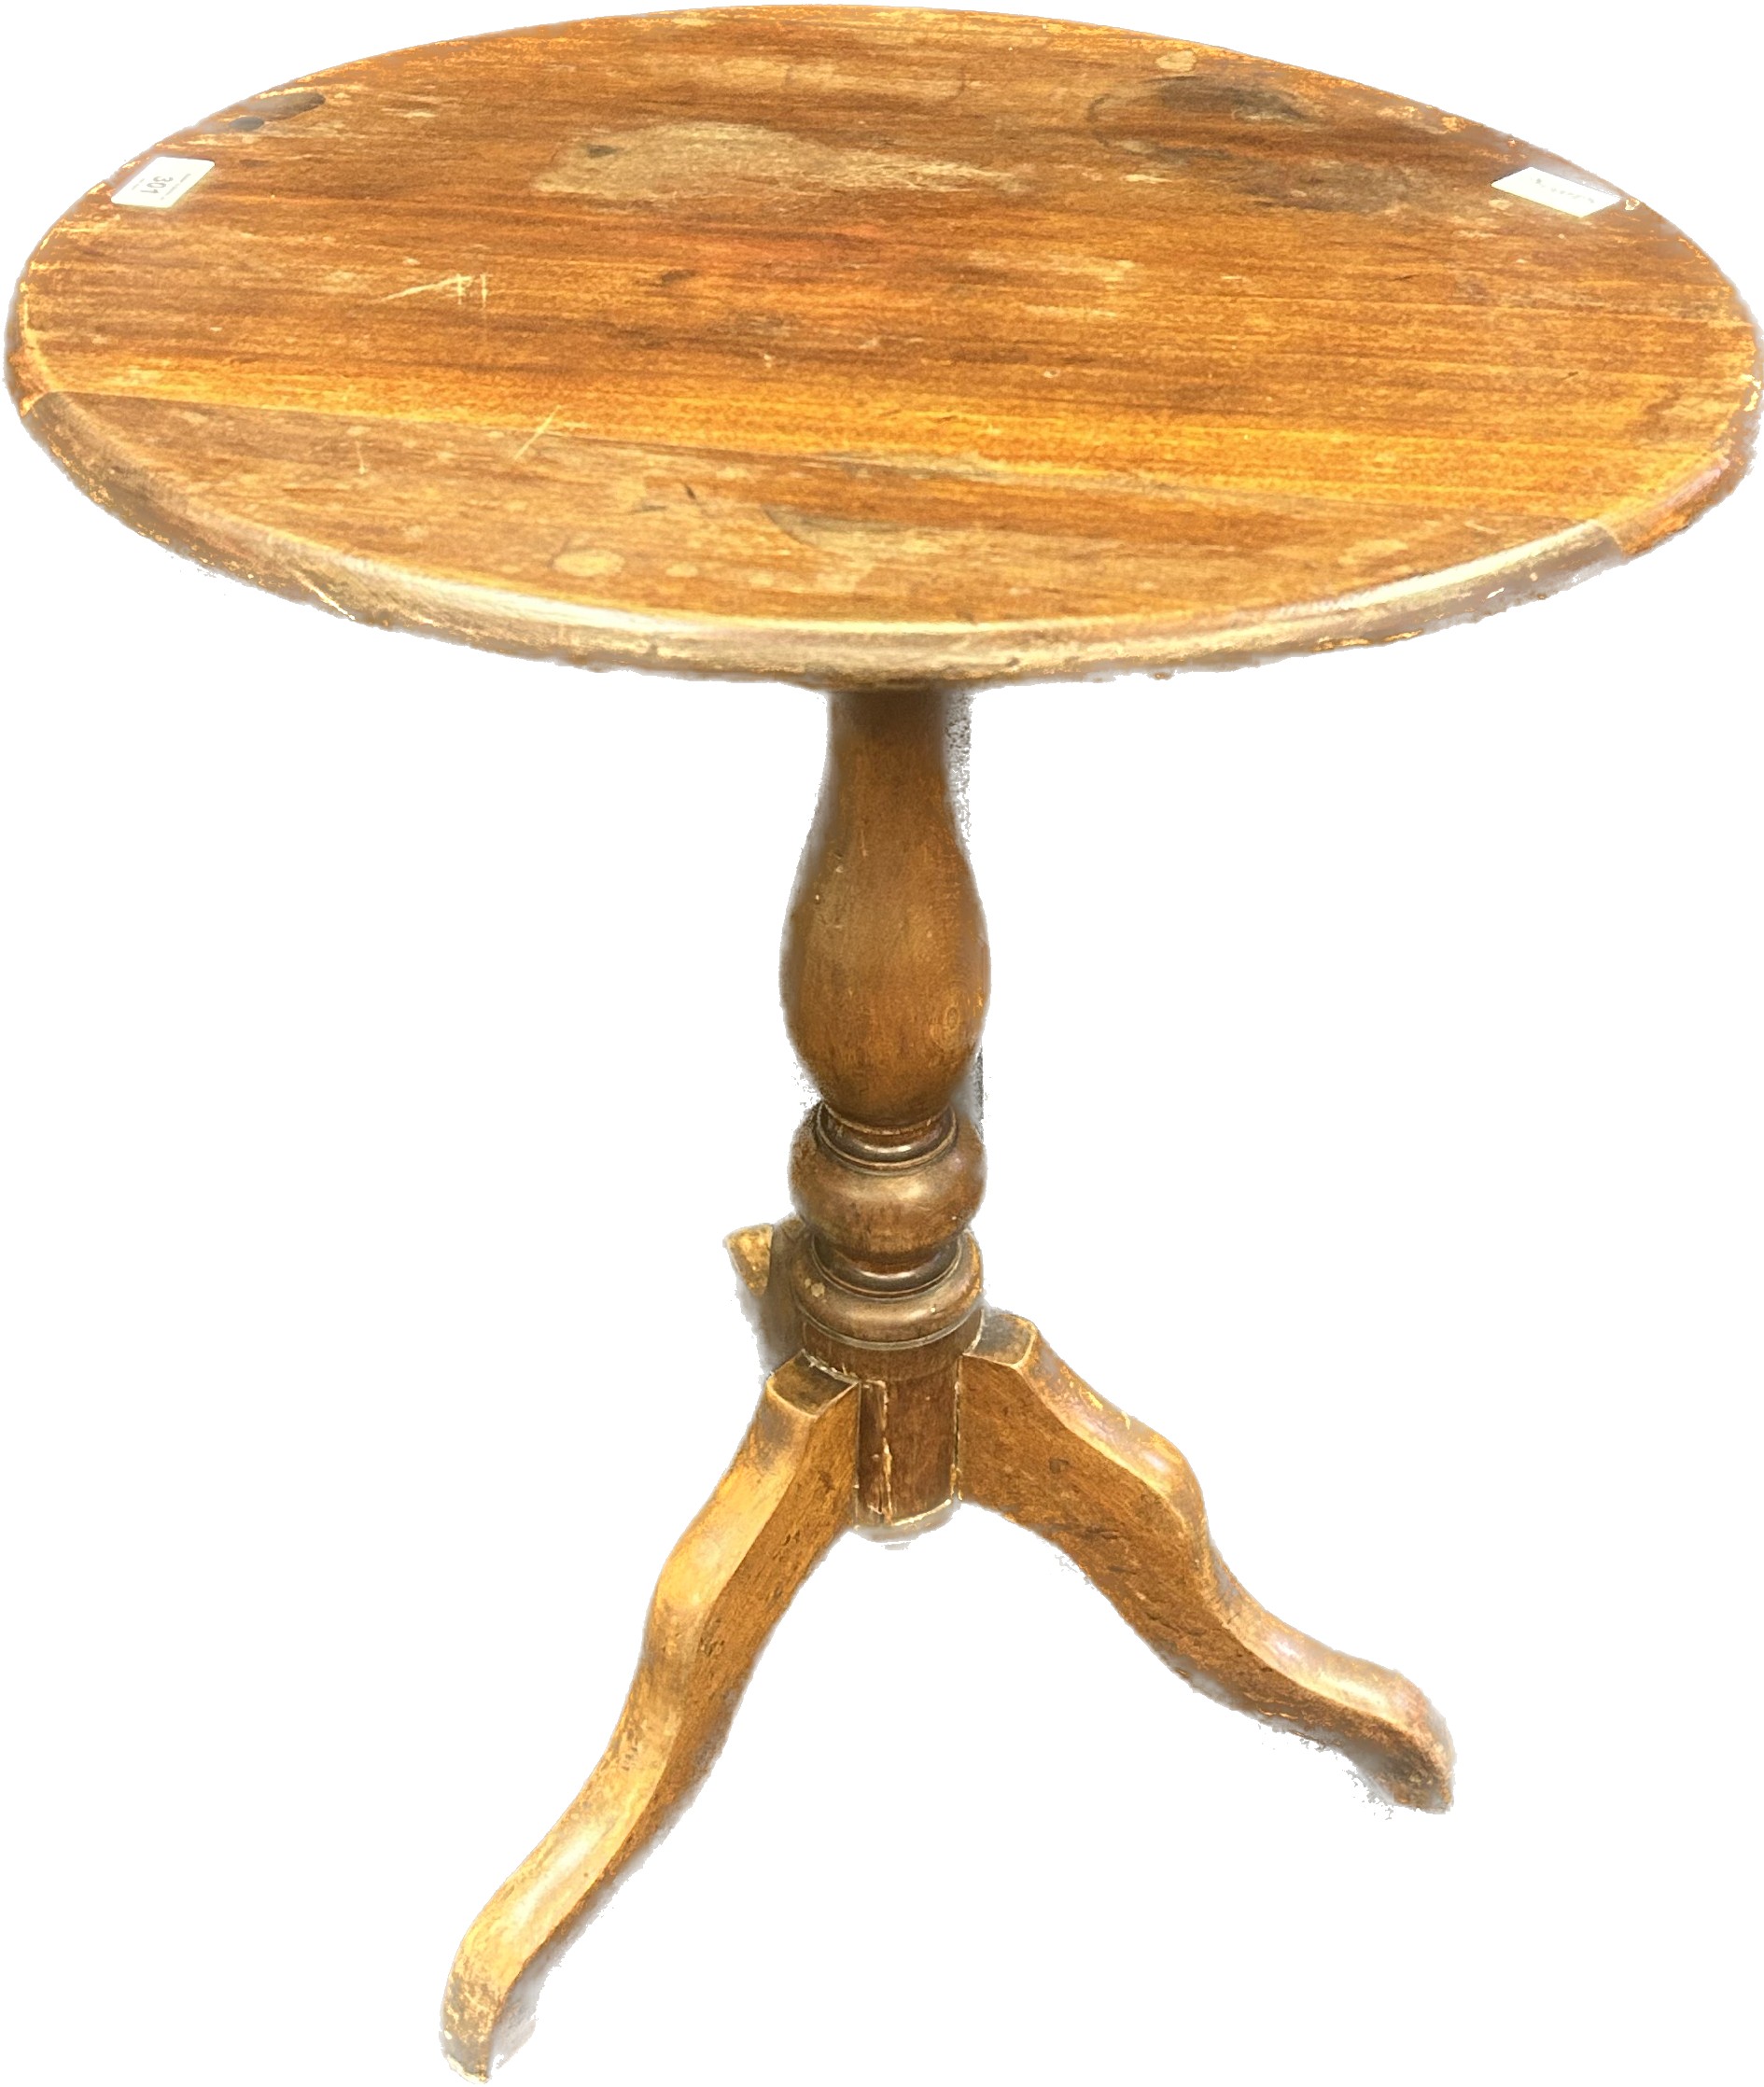 Antique side table, raised on tripod base [71x58x49cm] - Image 2 of 2